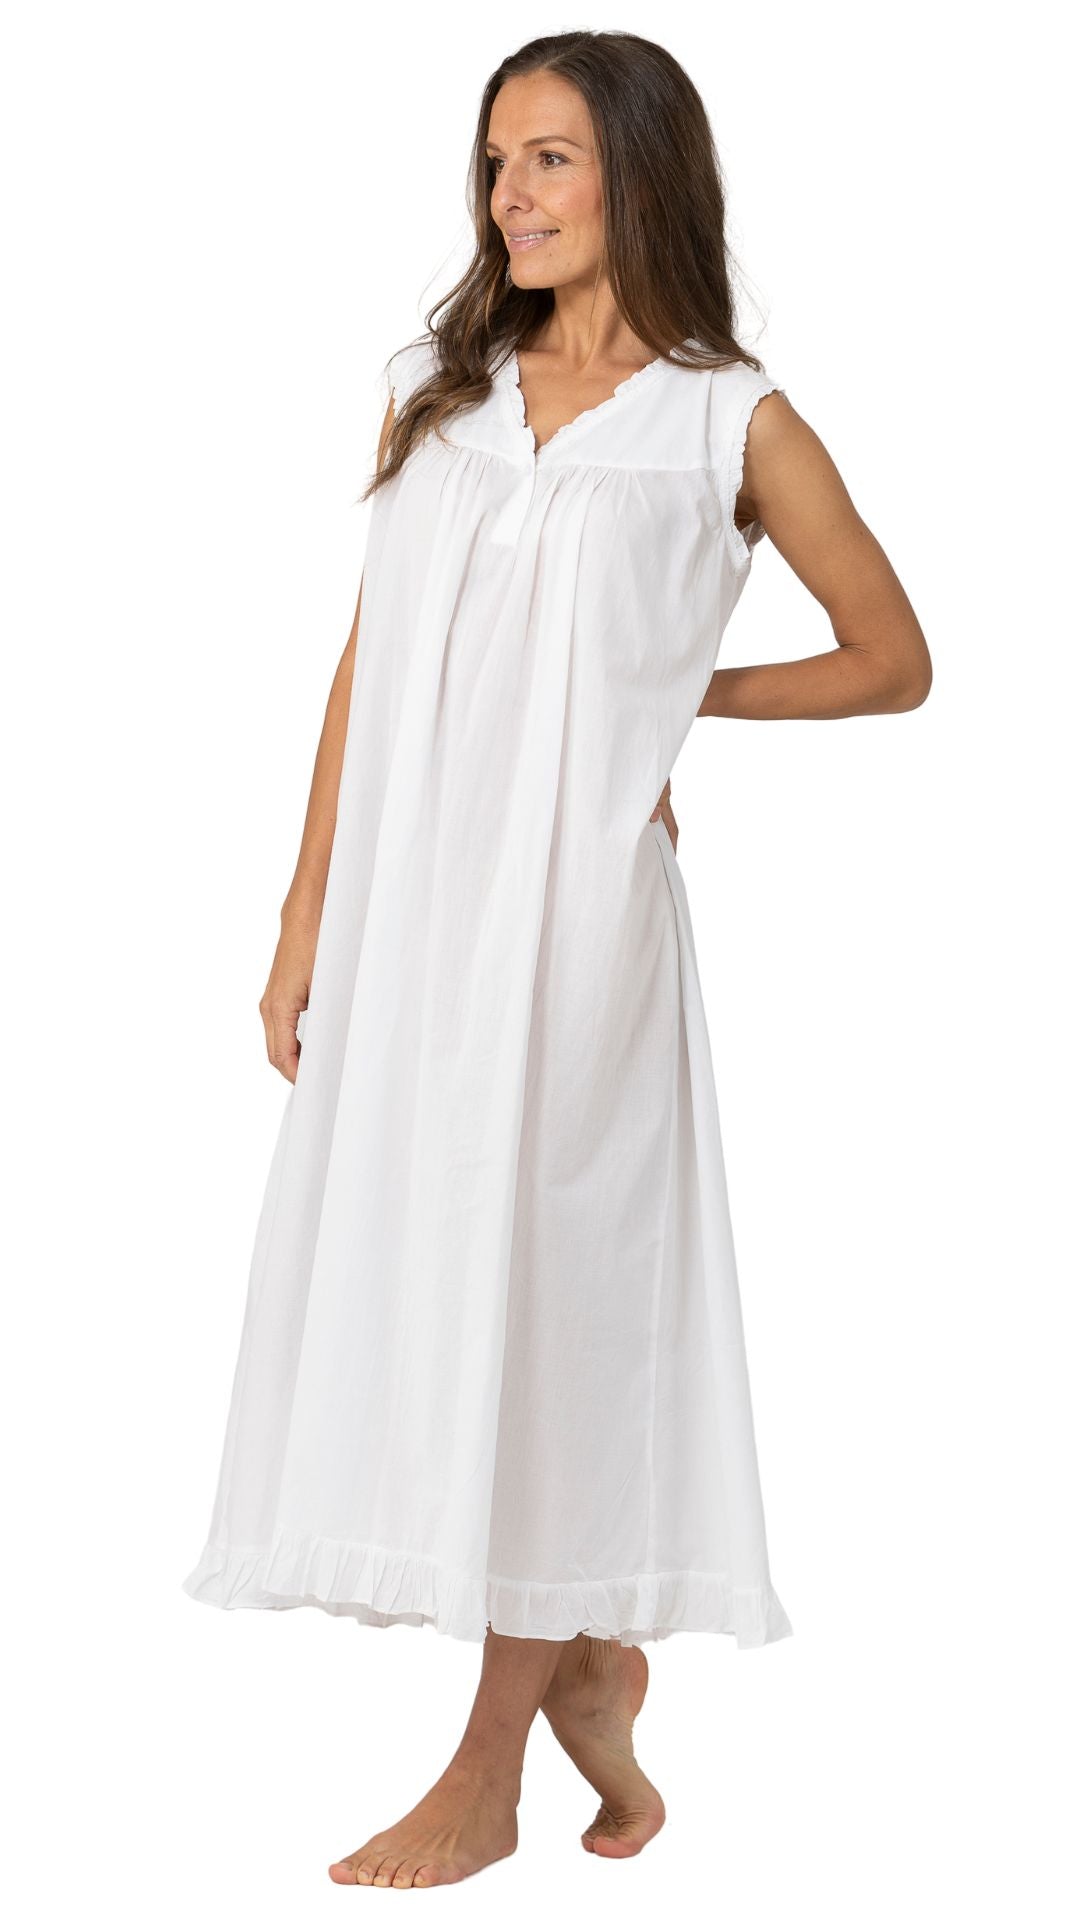 white cotton nightdress for plus size women online